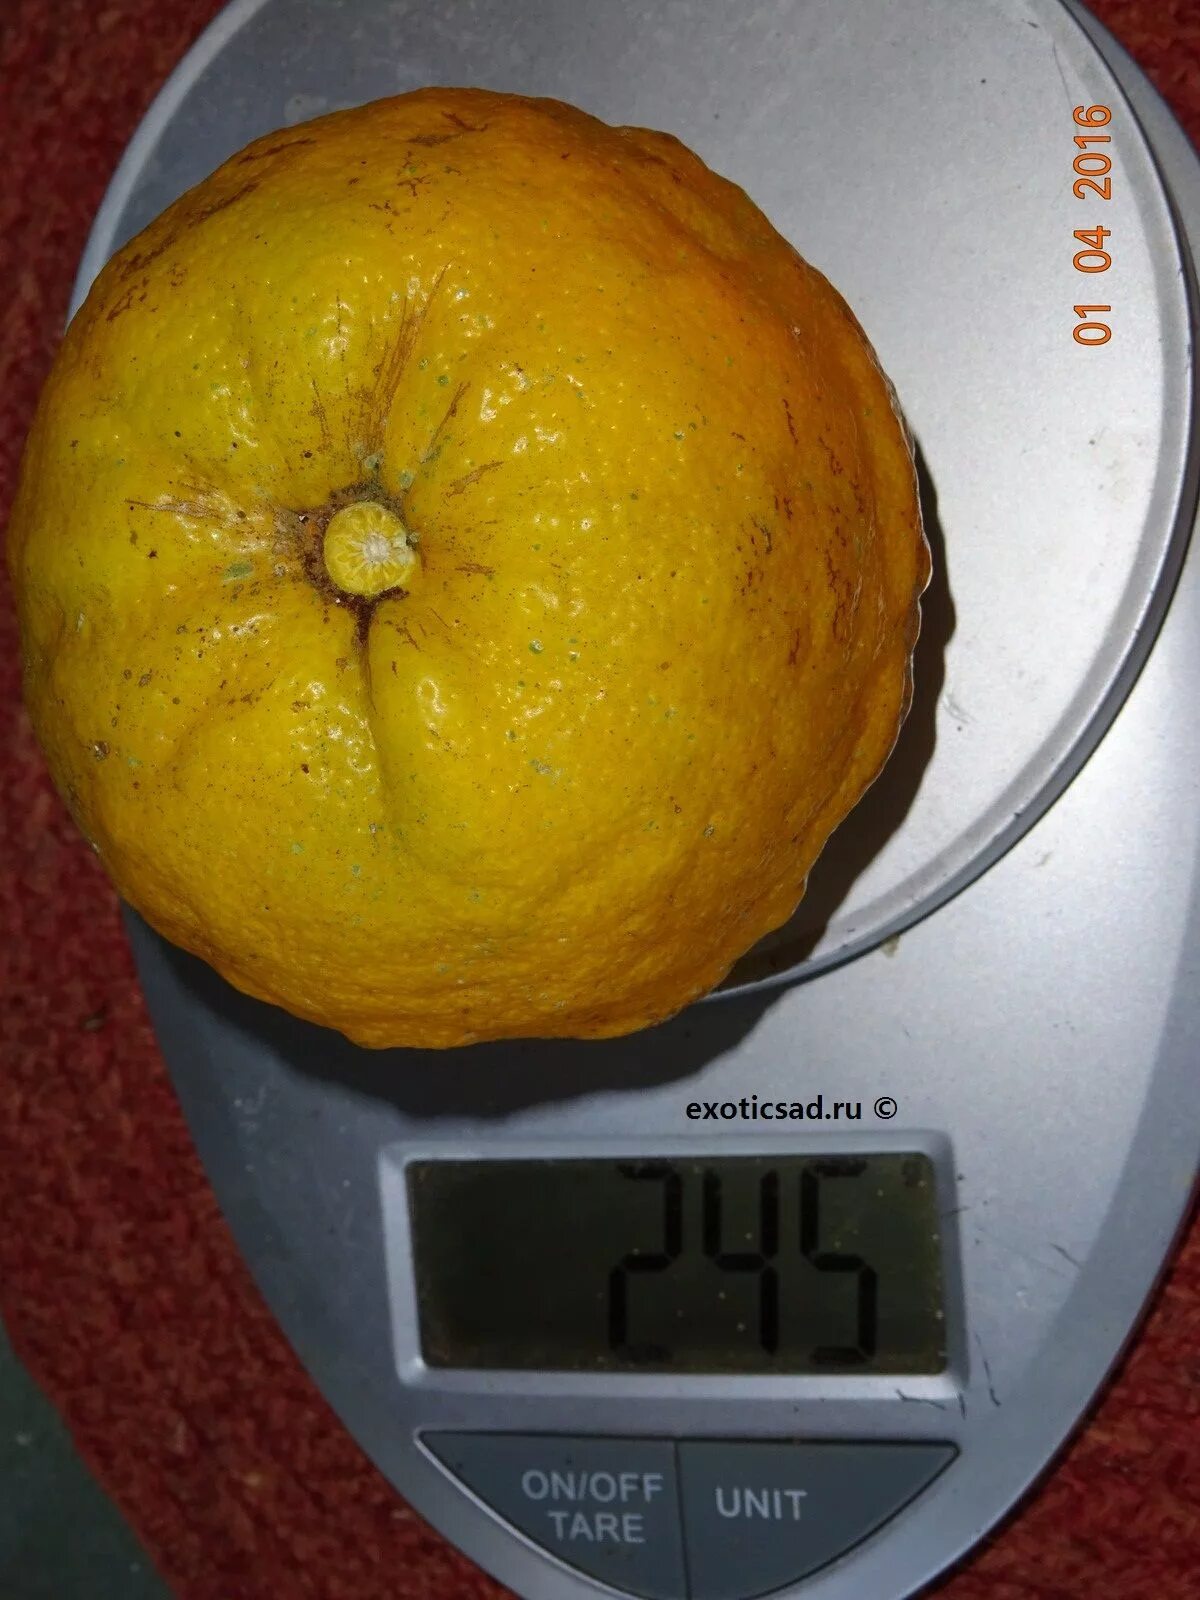 Калорийность 1 апельсина без кожуры. Мандарин вес 1 шт без кожуры. Апельсины, вес. Апельсин грамм. Масса апельсина.